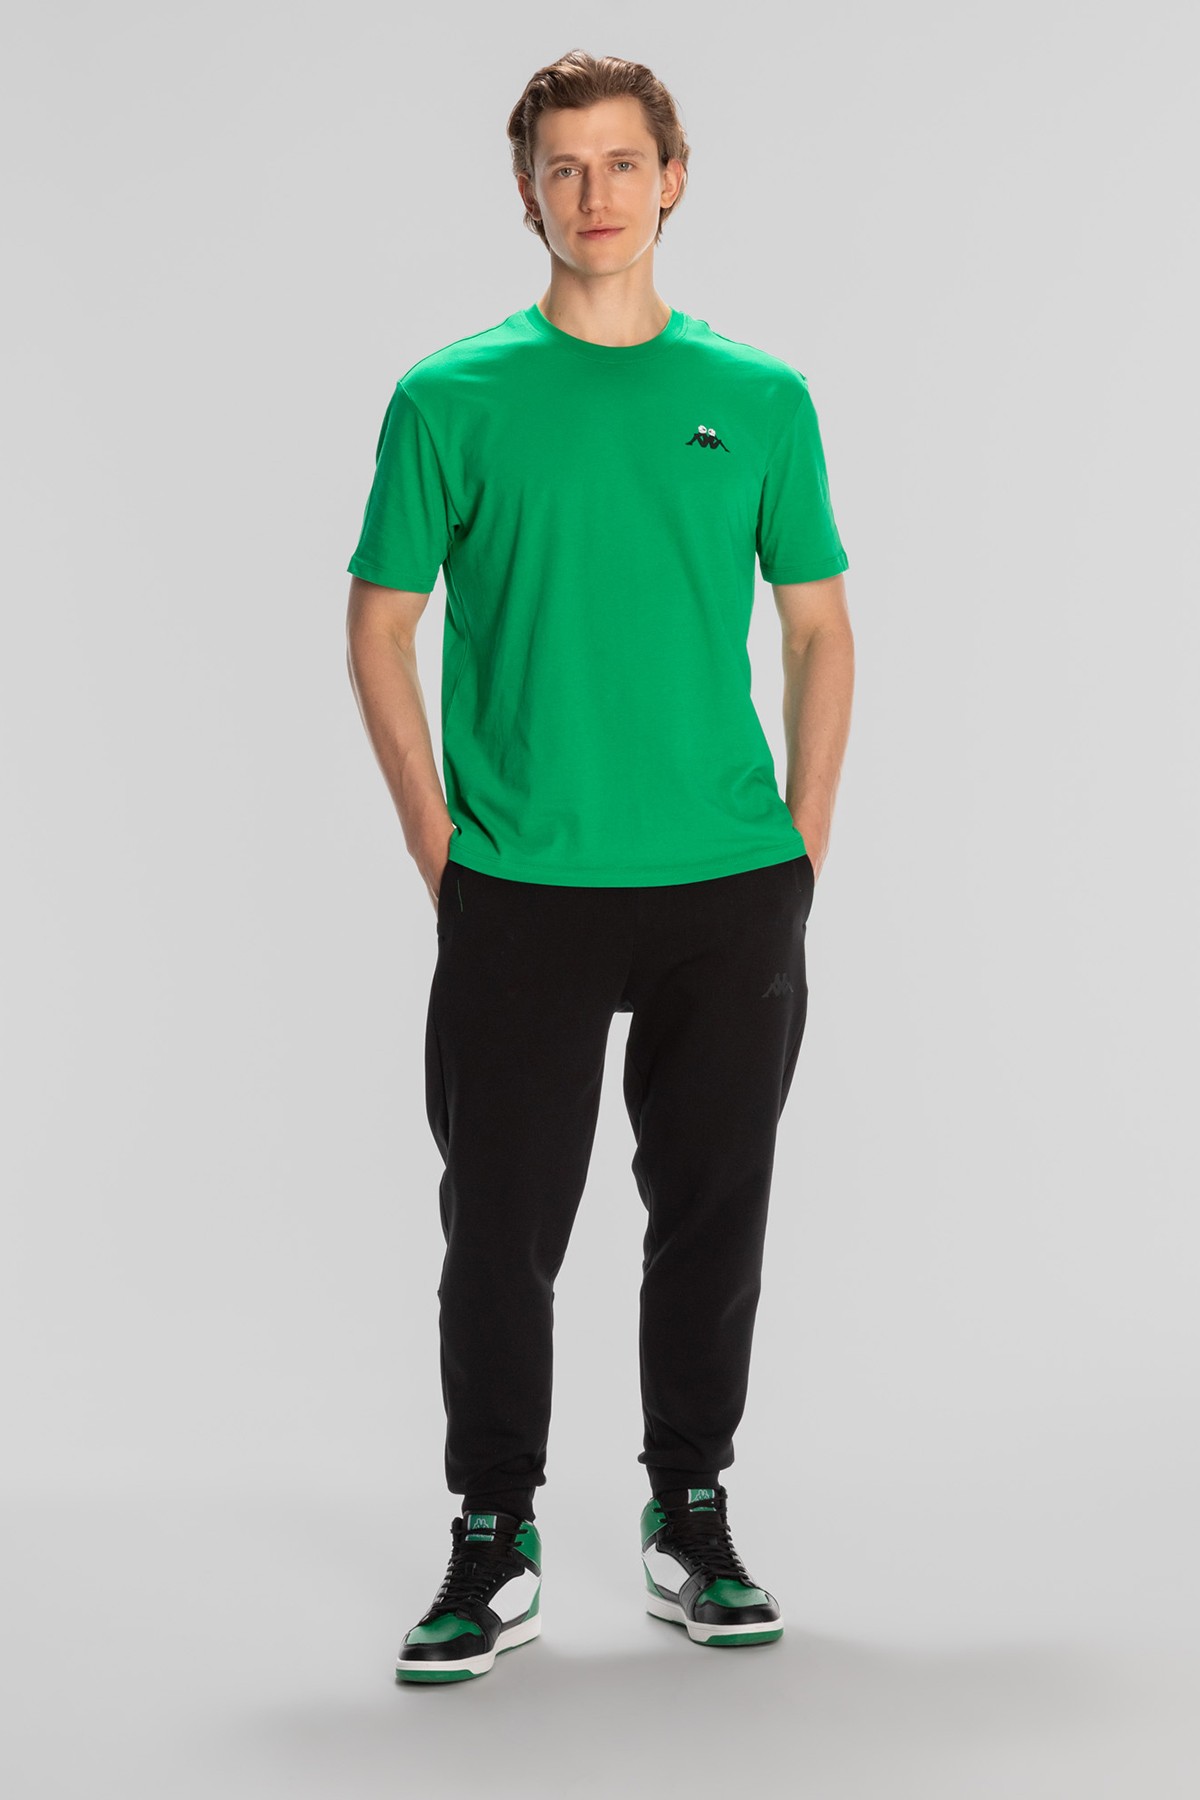 Kappa Authentic Space Jump Erkek T-Shirt - Yeşil